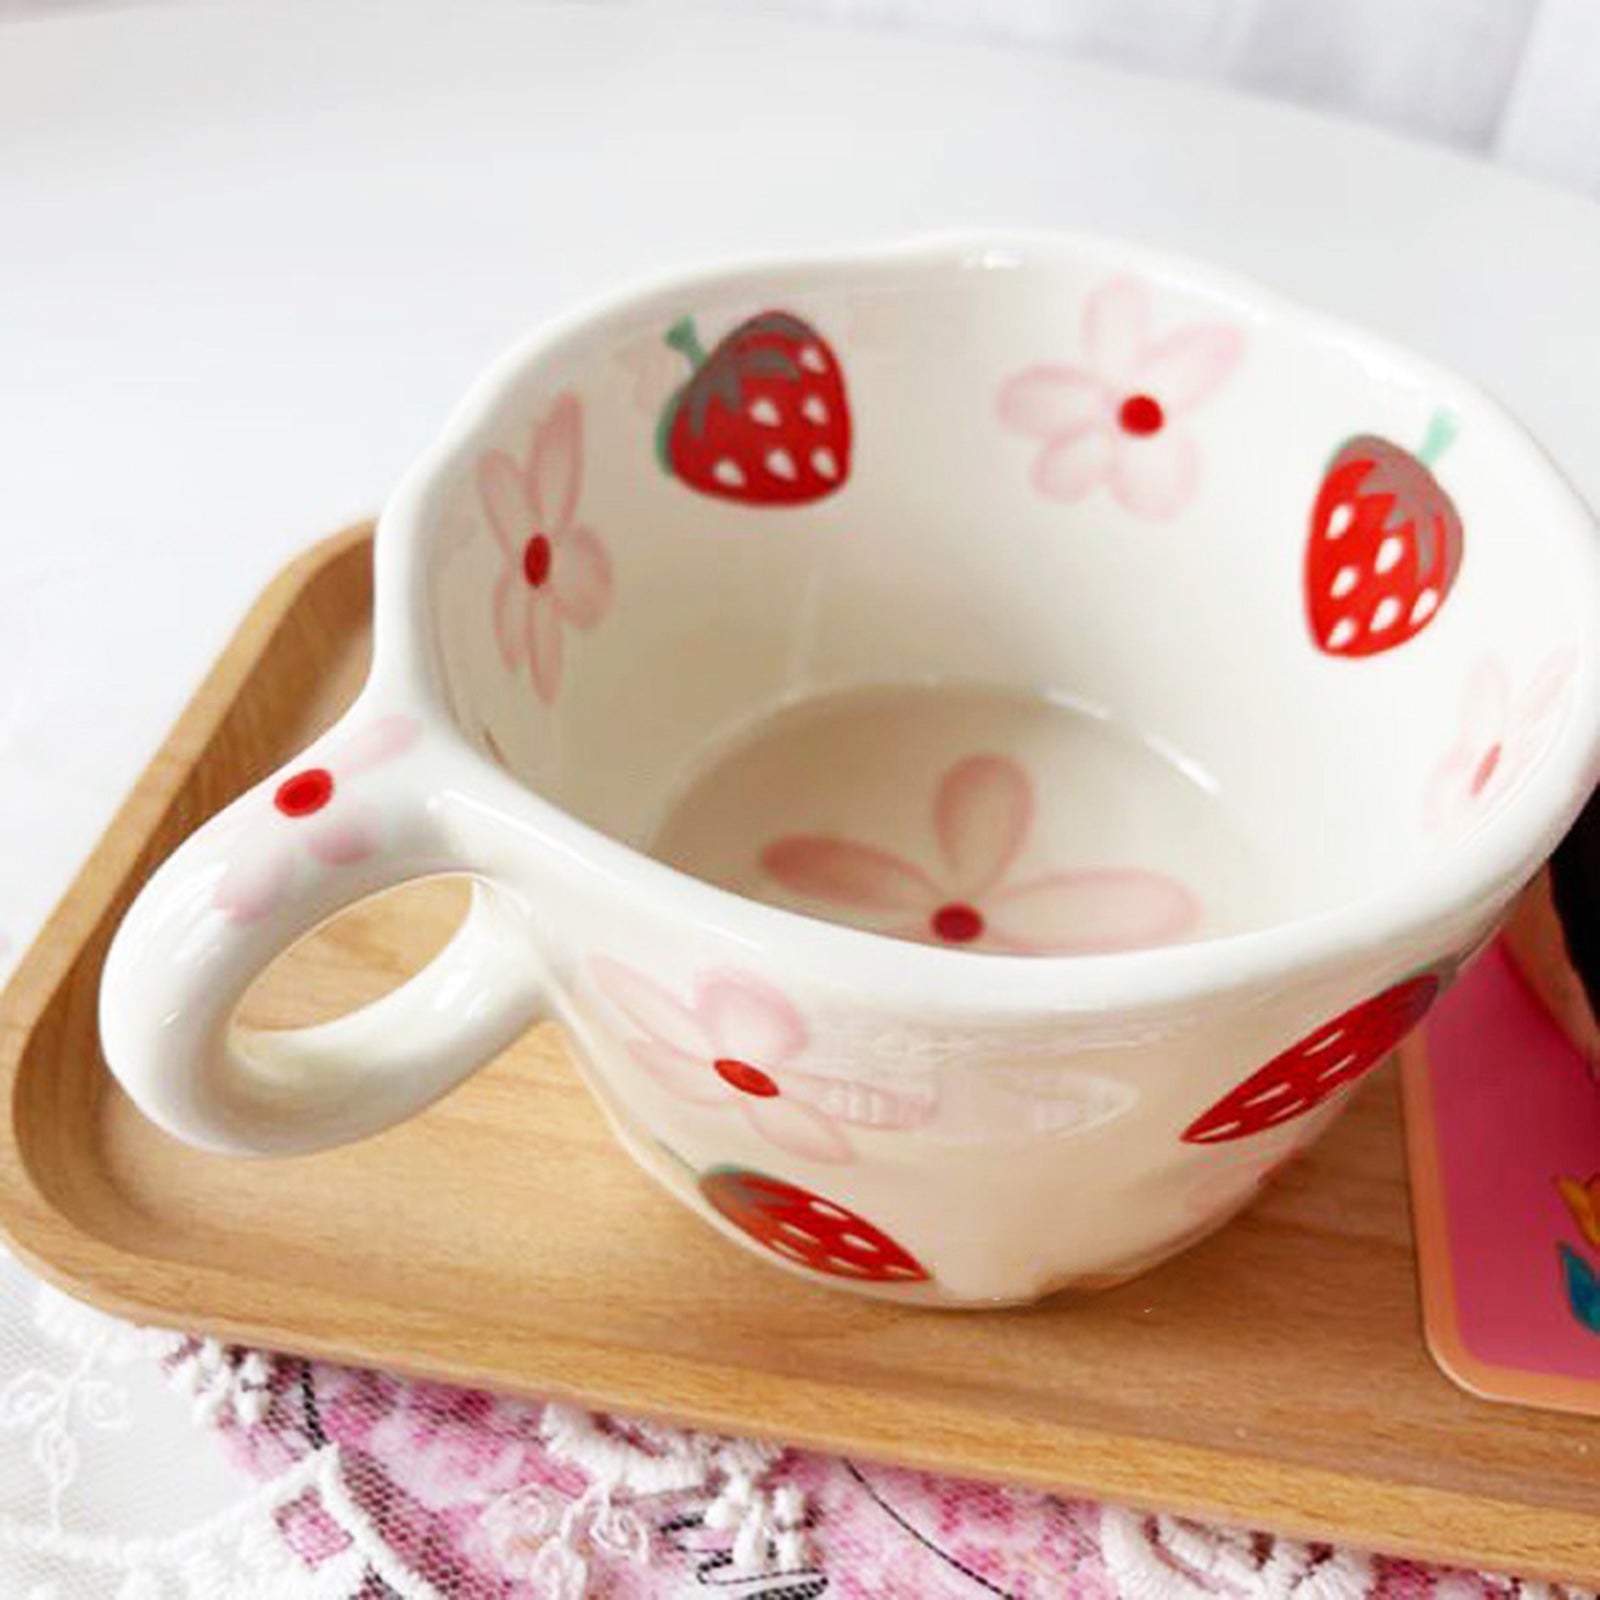 Retro-Inspired Strawberry Patterned Mugs